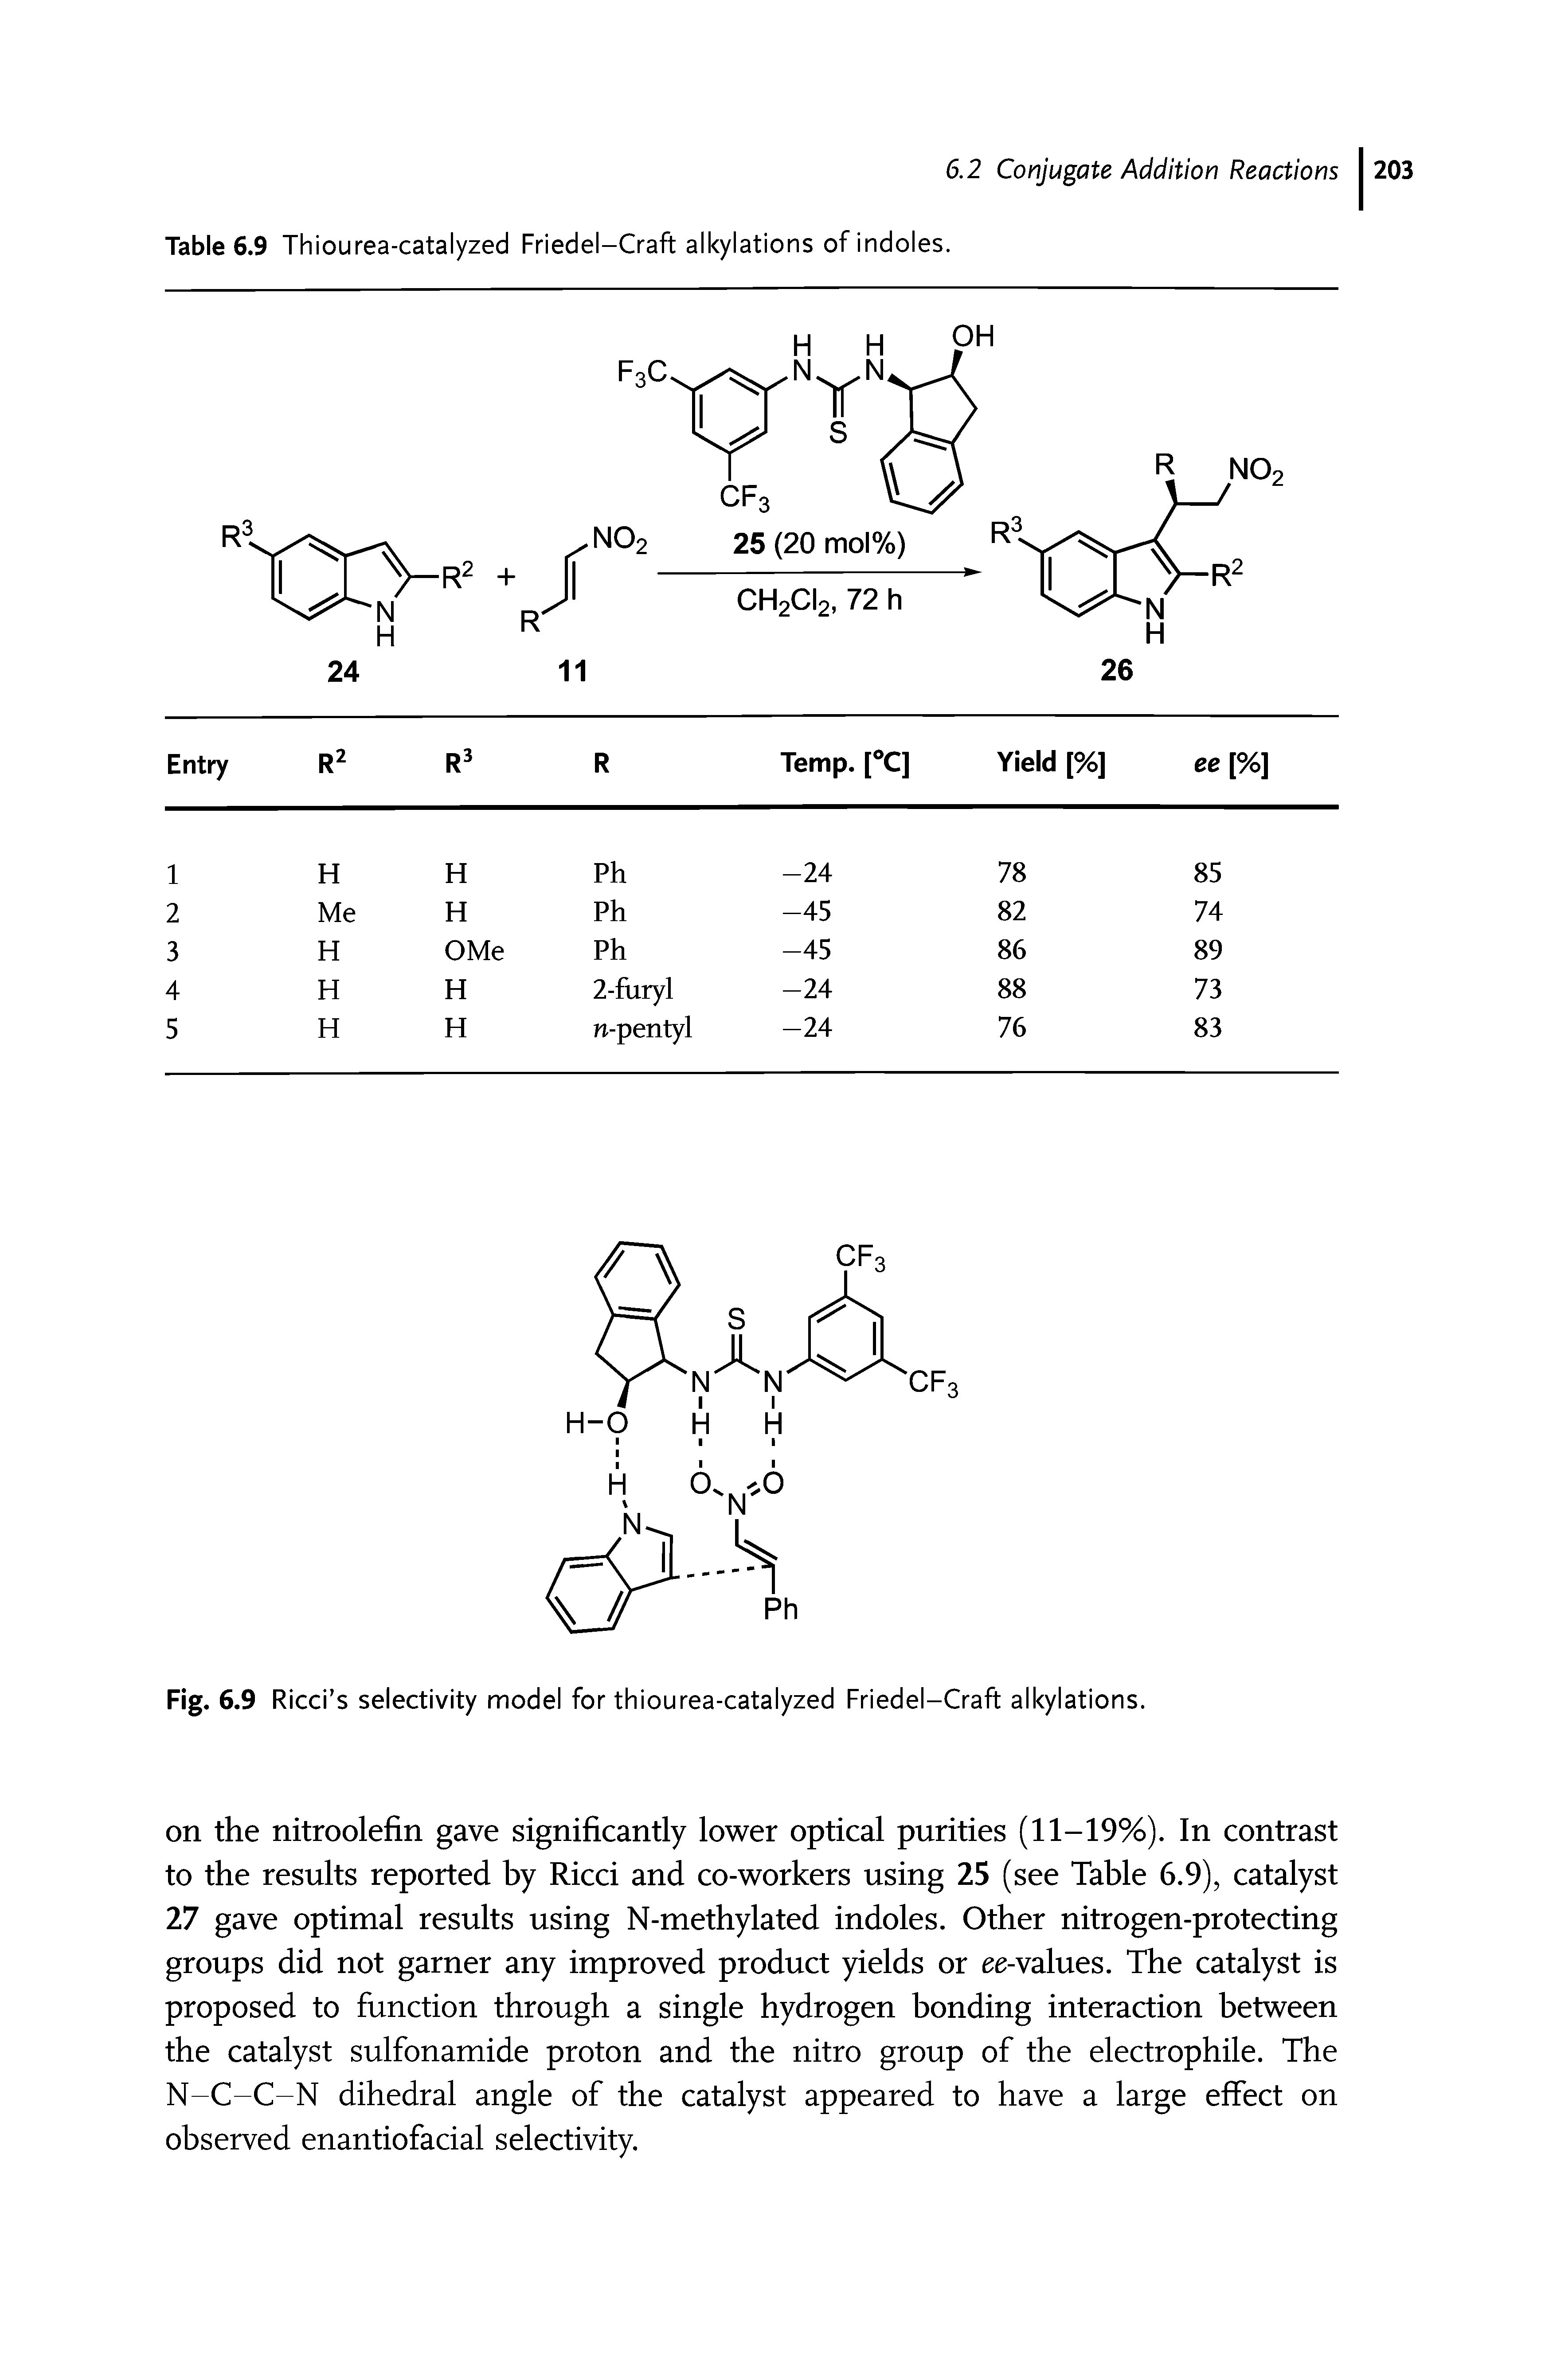 Table 6.9 Thiourea-catalyzed Friedel-Craft alkylations of indoles.